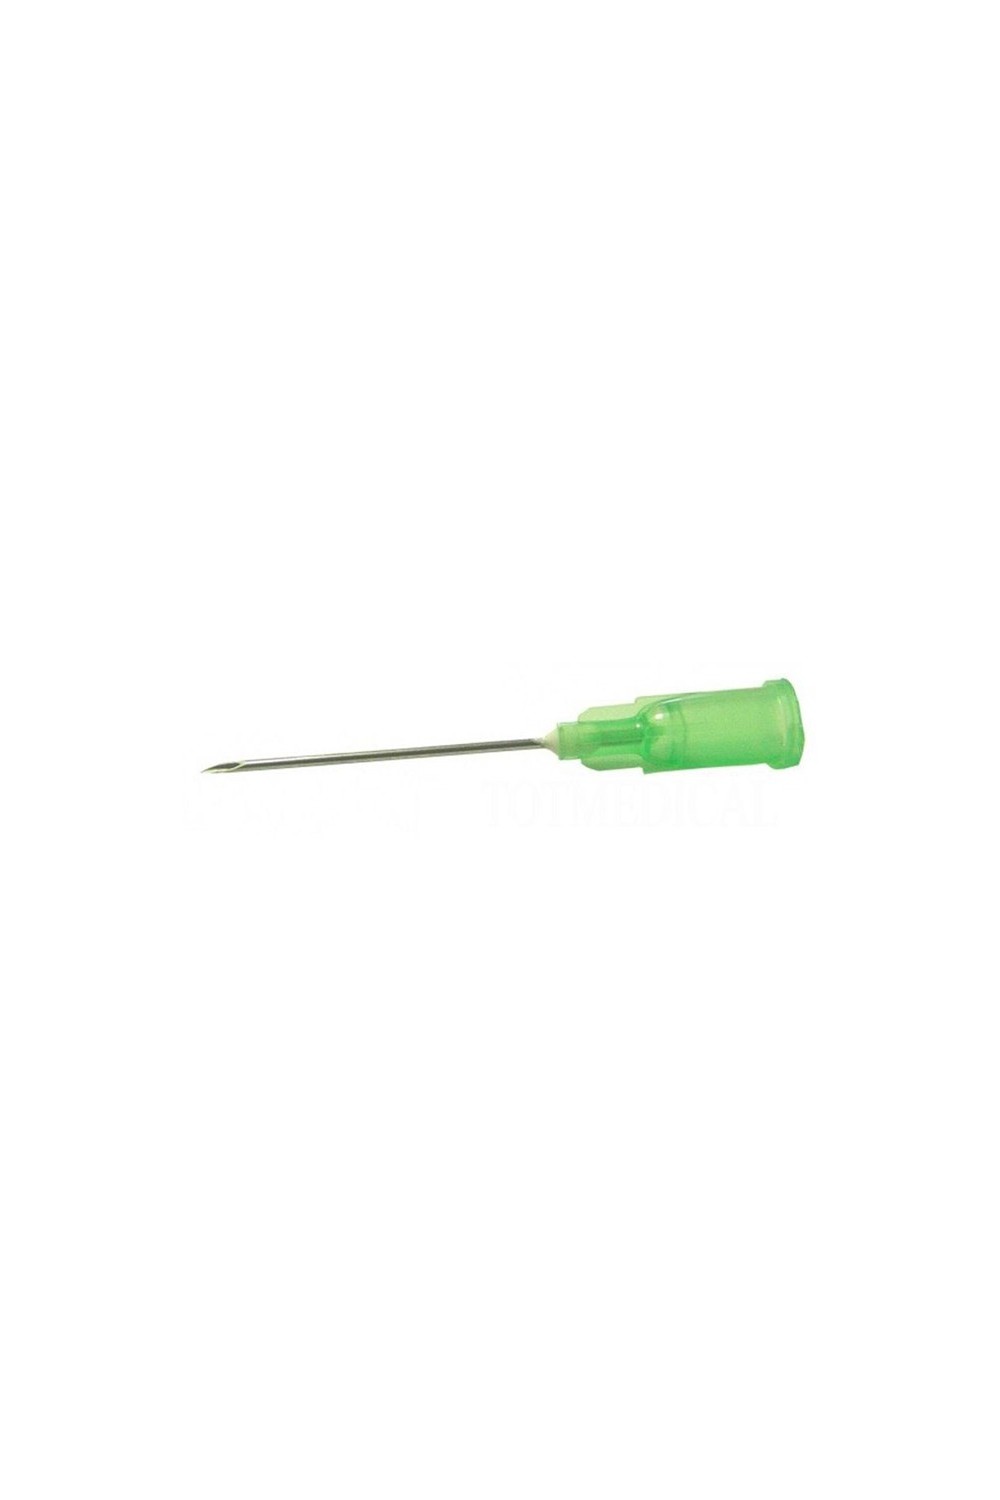 Ico Luer Needle 0,8X25mm Green G21